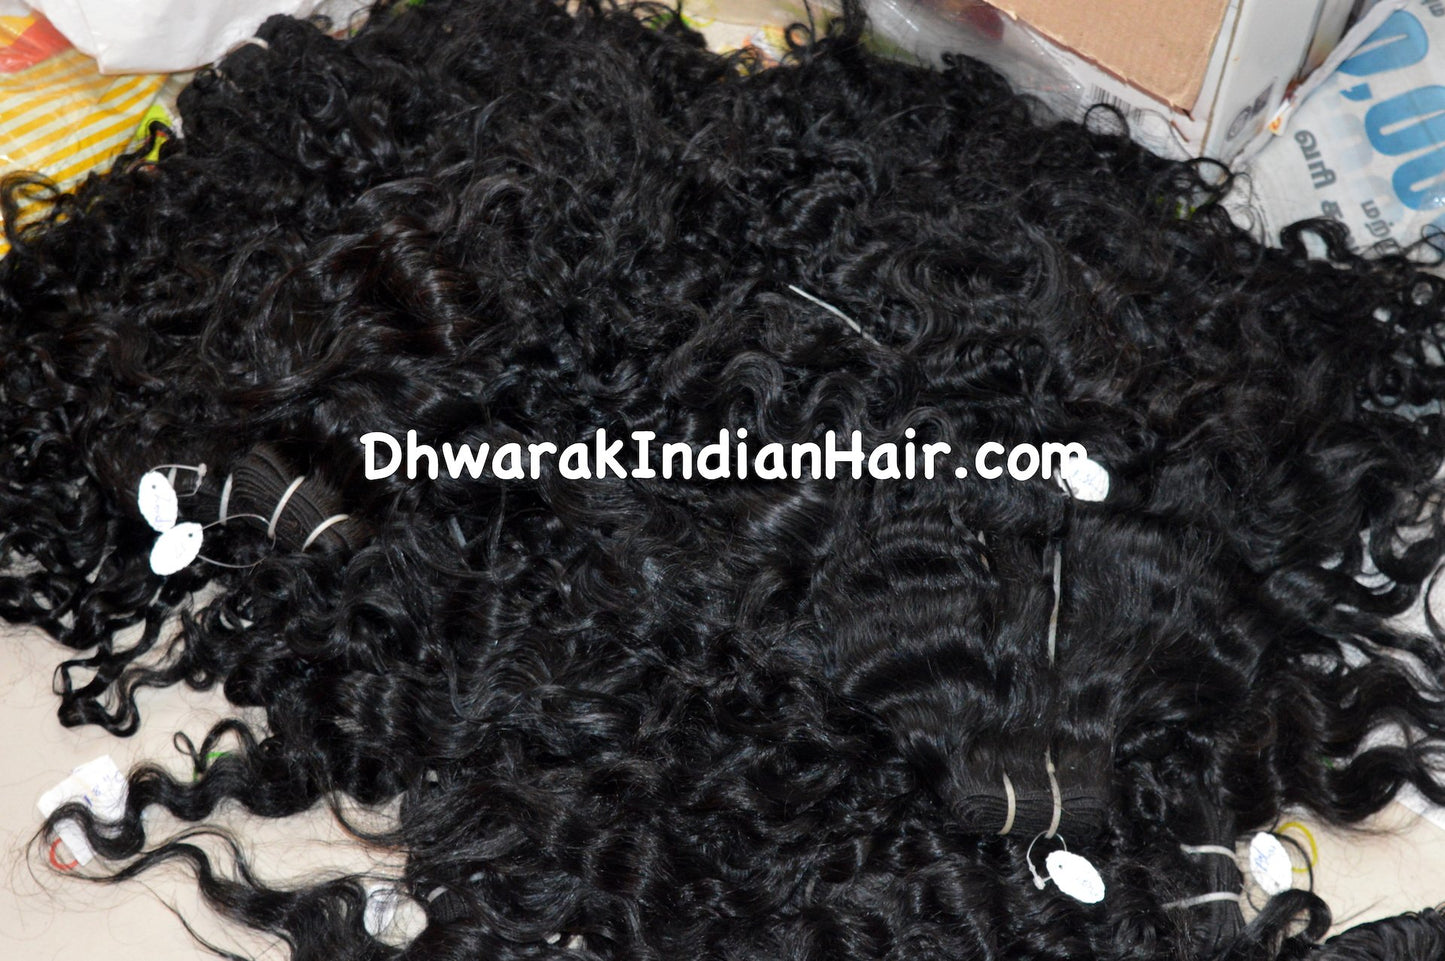 Raw Hair Vendor  Raw Indian Hair Vendor